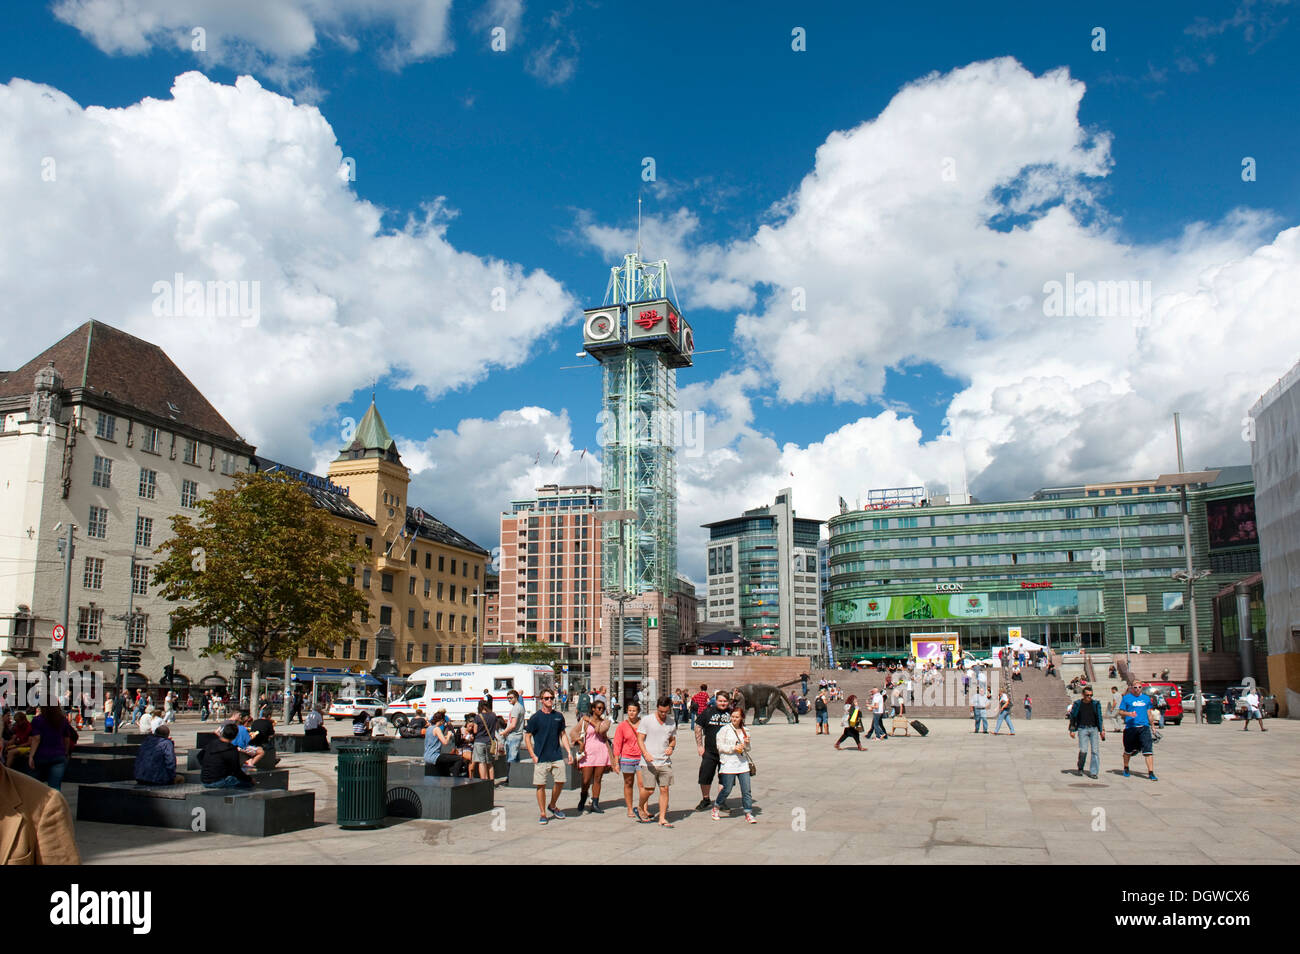 Public square, pedestrian zone, Trafikanten tower, transportation hub in the city, Oslo, Norway, Scandinavia, Northern Europe Stock Photo